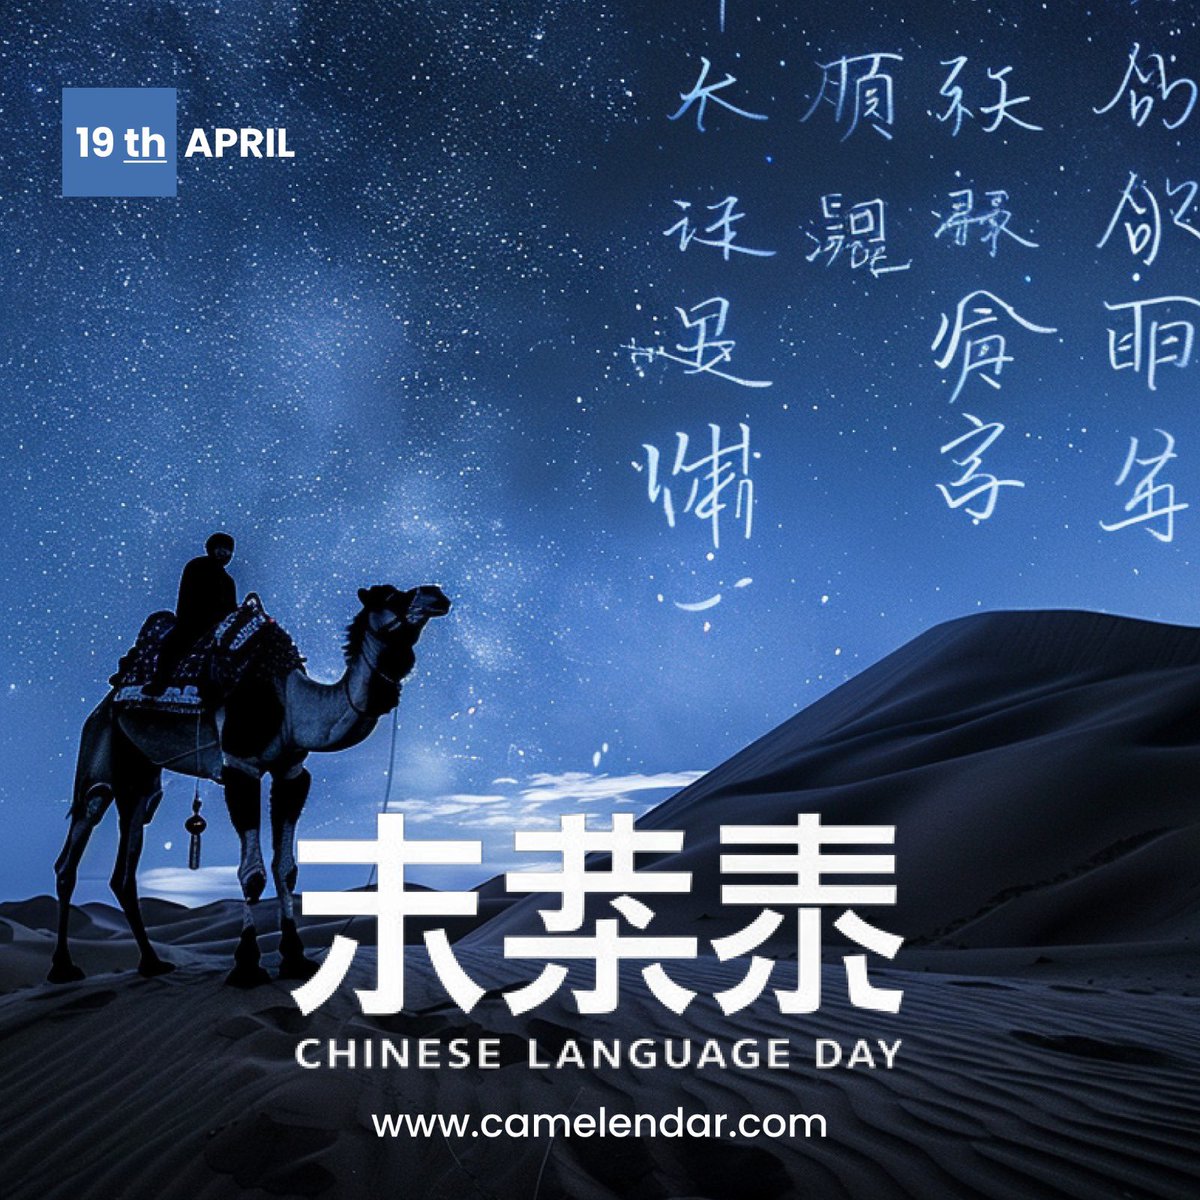 #ChineseLanguageDay #Mandarin #CamelMilk #China #LanguageDiversity #CulturalHeritage #GlobalEconomy #Camelendar #BactrianCamels #LanguageLearning #CulturalExchange #IYC2024 #FAO #SaveTheDate #EventPlanner #CamelidEvents #CamelidsInChina #InternationalYearOfCamelids #19thApril 🇨🇳